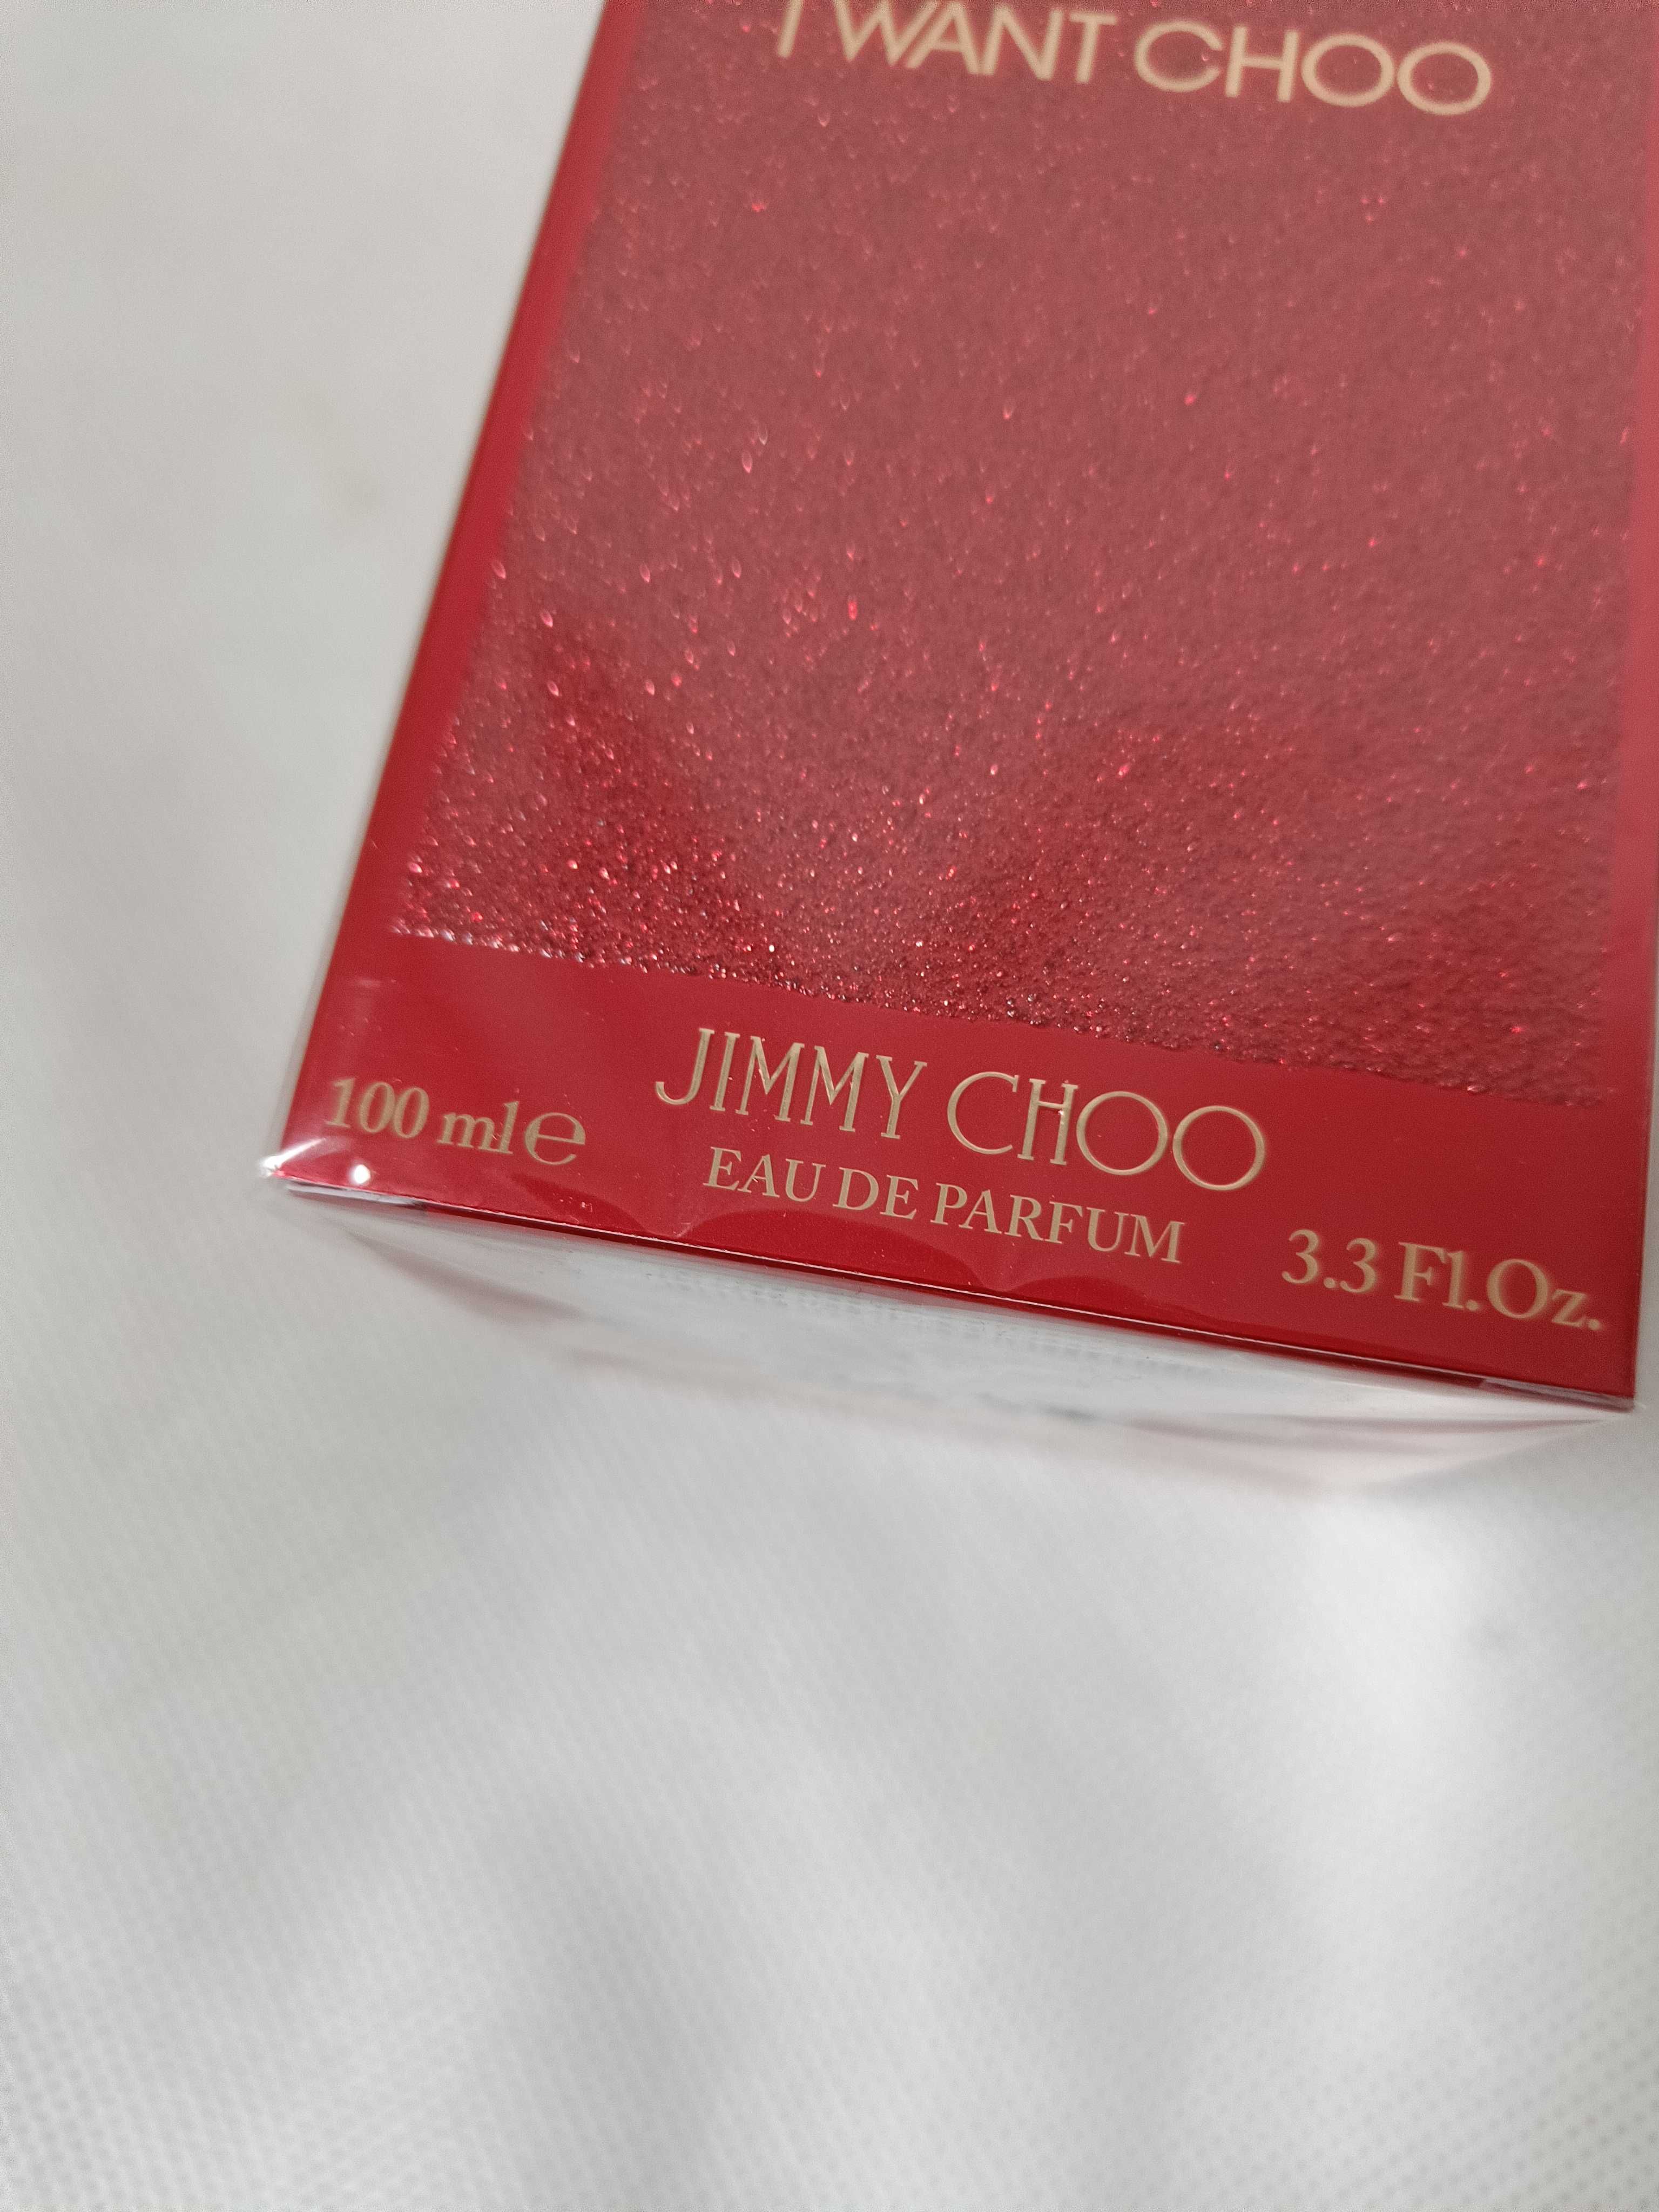 Nowa woda perfumowana perfumy Jimmy Choo I want choo 100ml